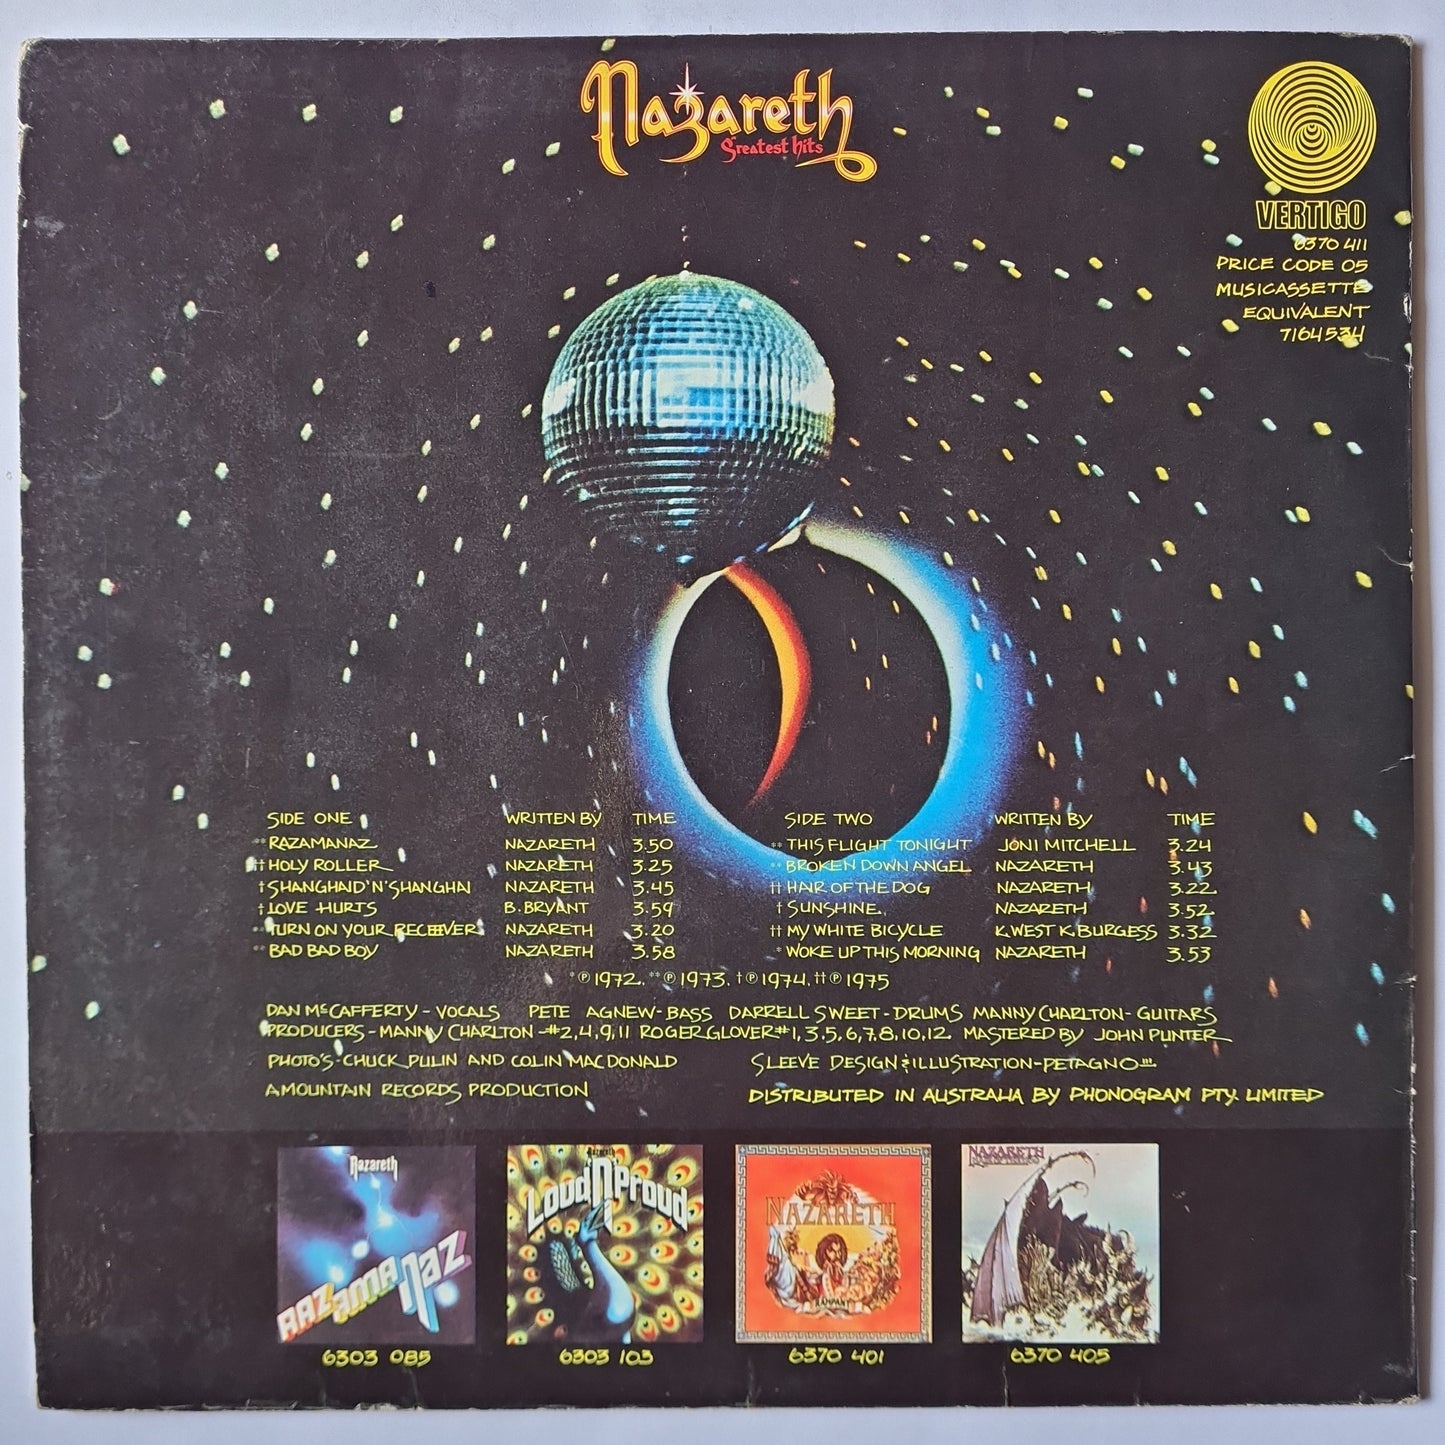 Nazareth – Greatest hits - 1975 - Vinyl Record